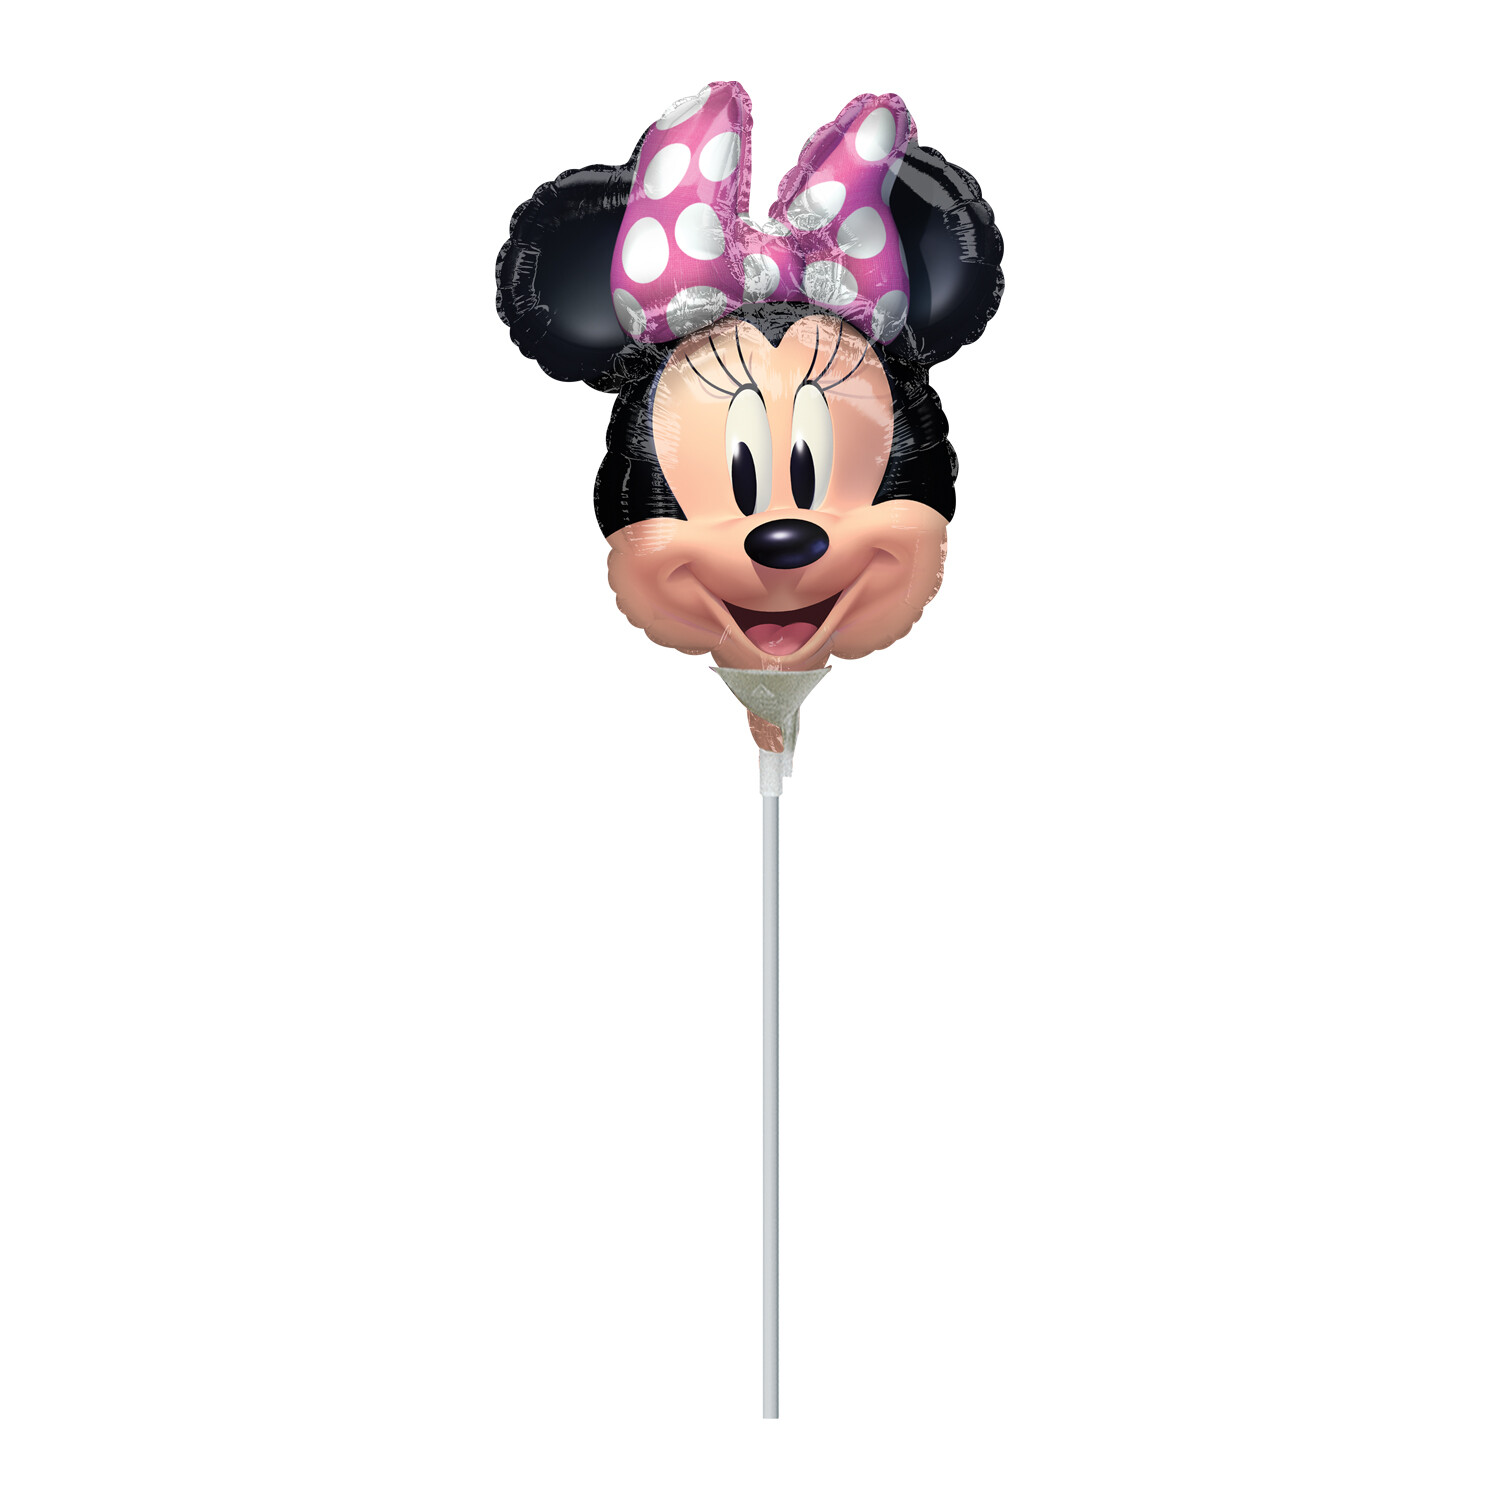 Minnie Mouse Minishape Balloon Image